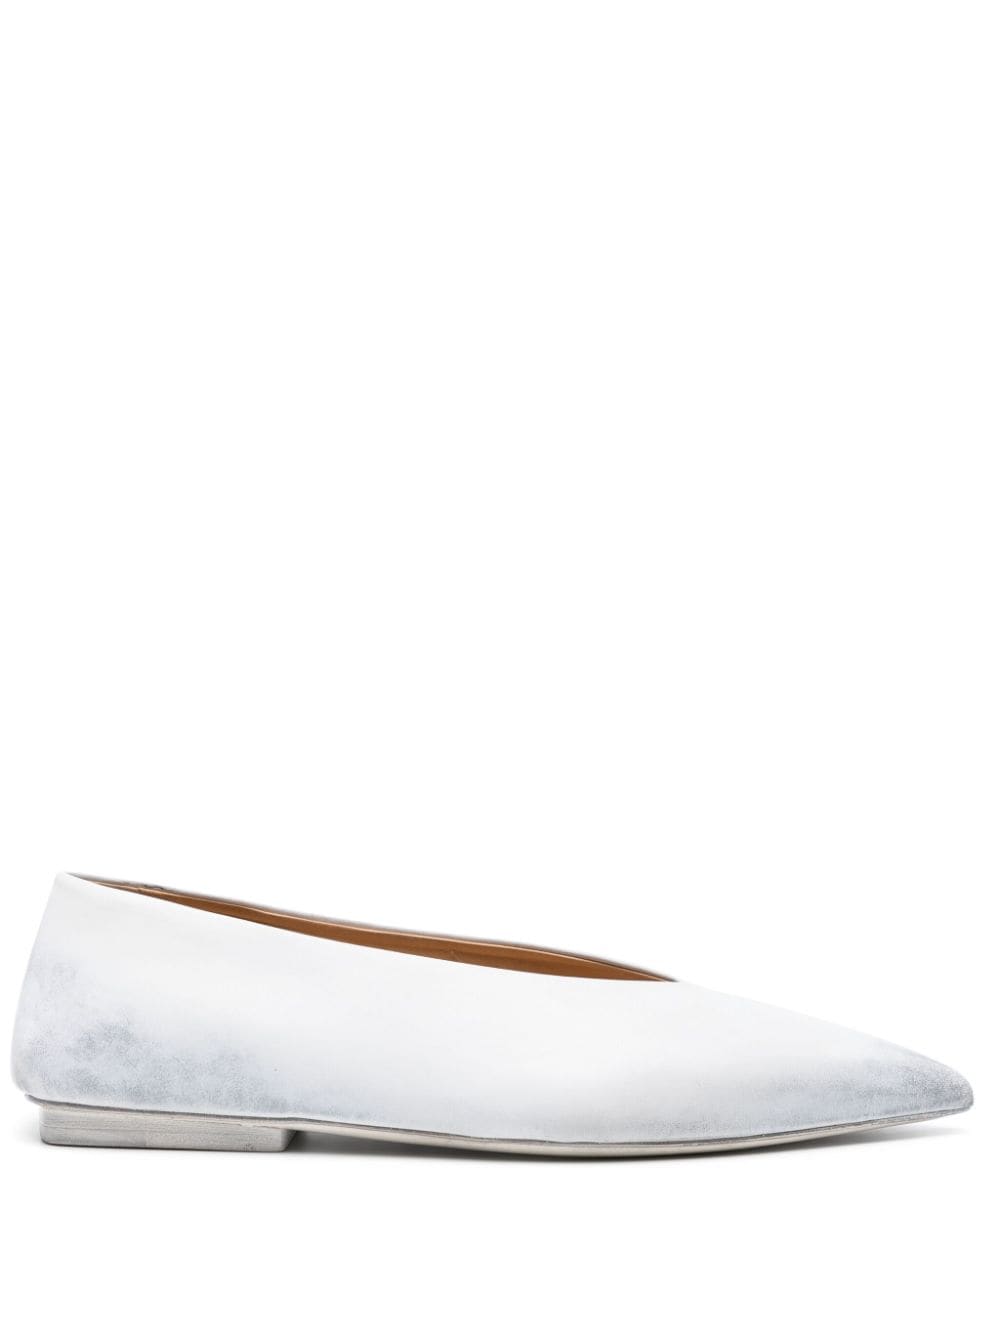 Marsèll distressed-effect leather ballerina shoes - White von Marsèll